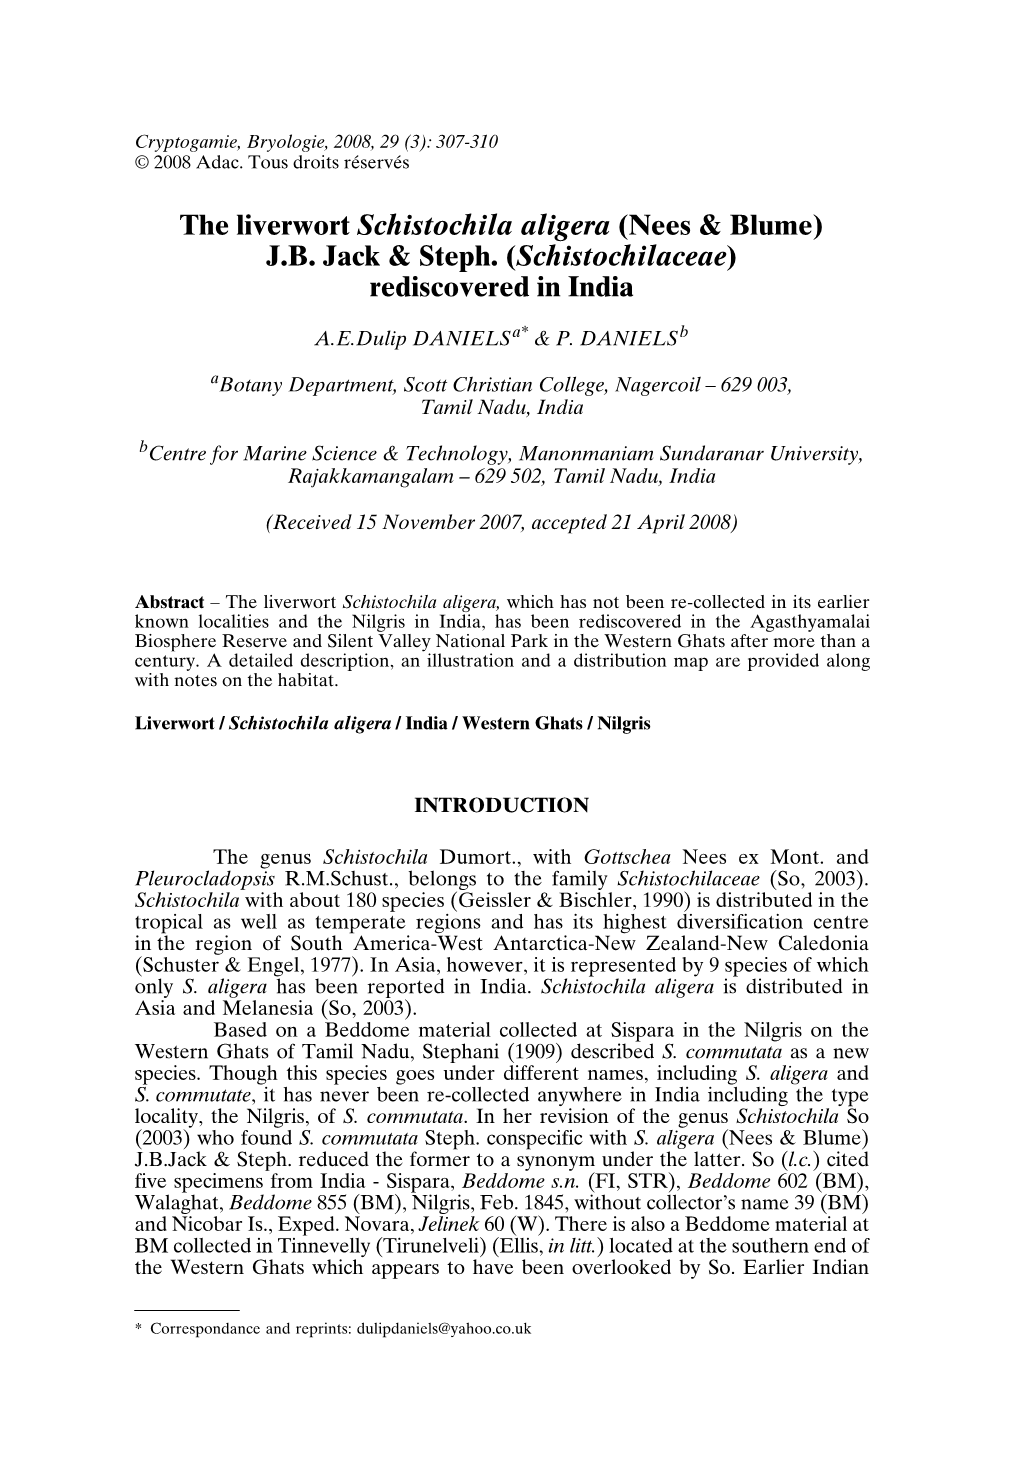 The Liverwort Schistochila Aligera (Nees & Blume) J.B. Jack & Steph